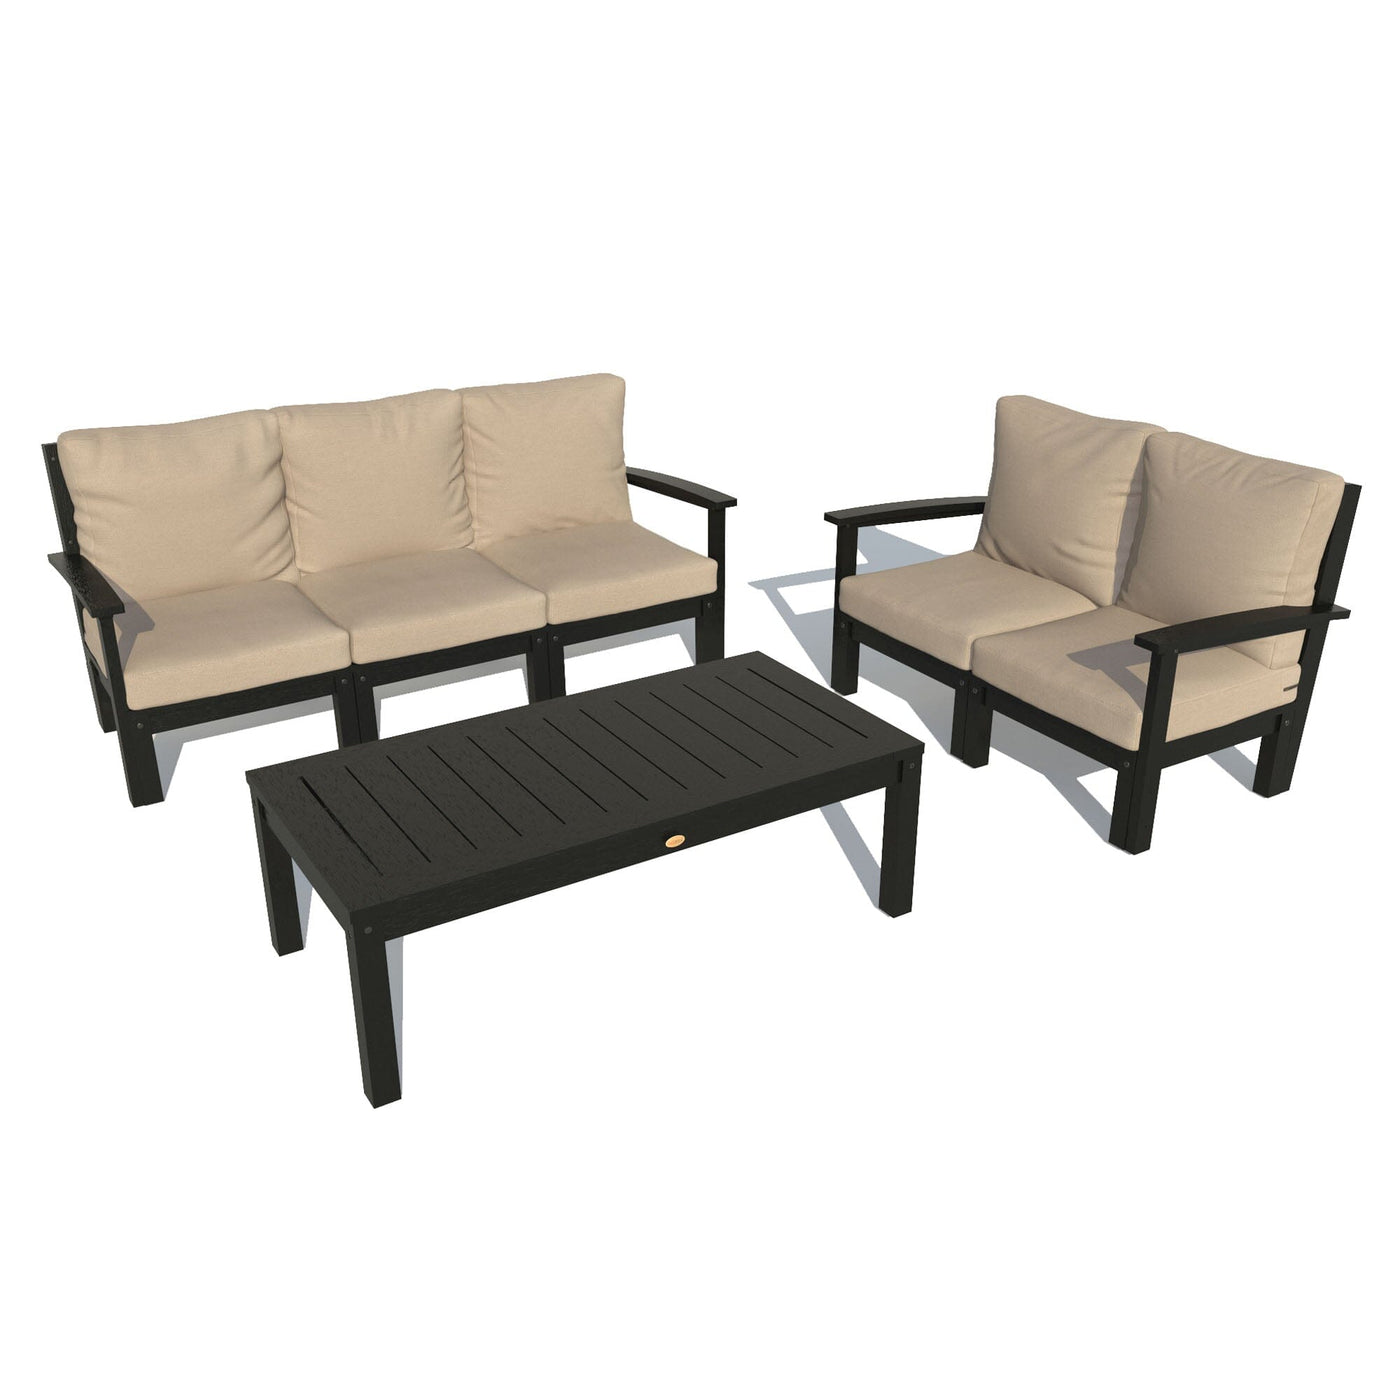 Bespoke Deep Seating: Sofa, Loveseat, and Conversation Table Deep Seating Highwood USA Driftwood Black 